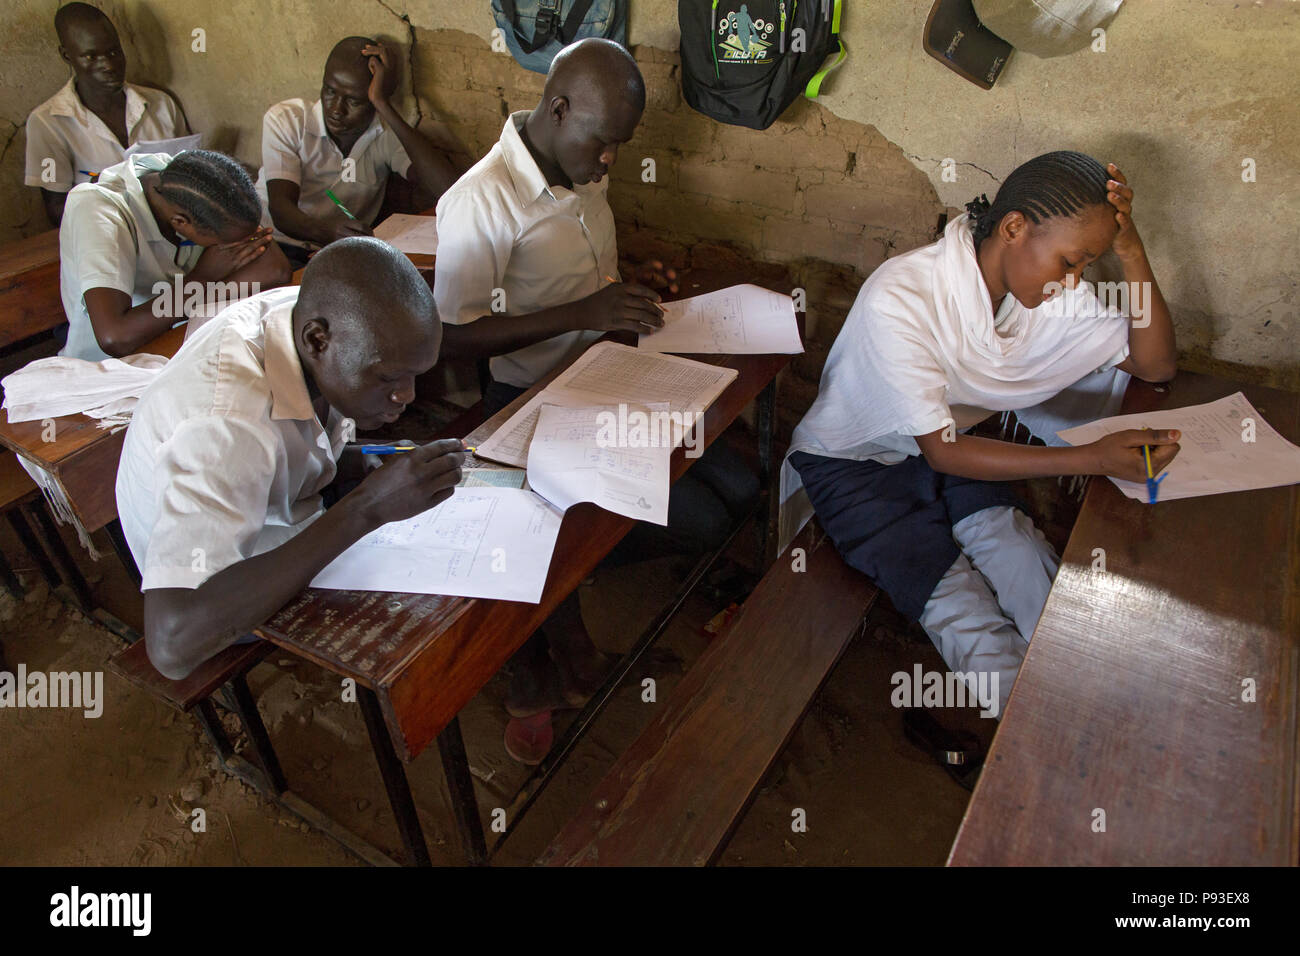 Kakuma, Kenya - Students write exams in a classroom of a school building in the Kakuma refugee camp. Stock Photo